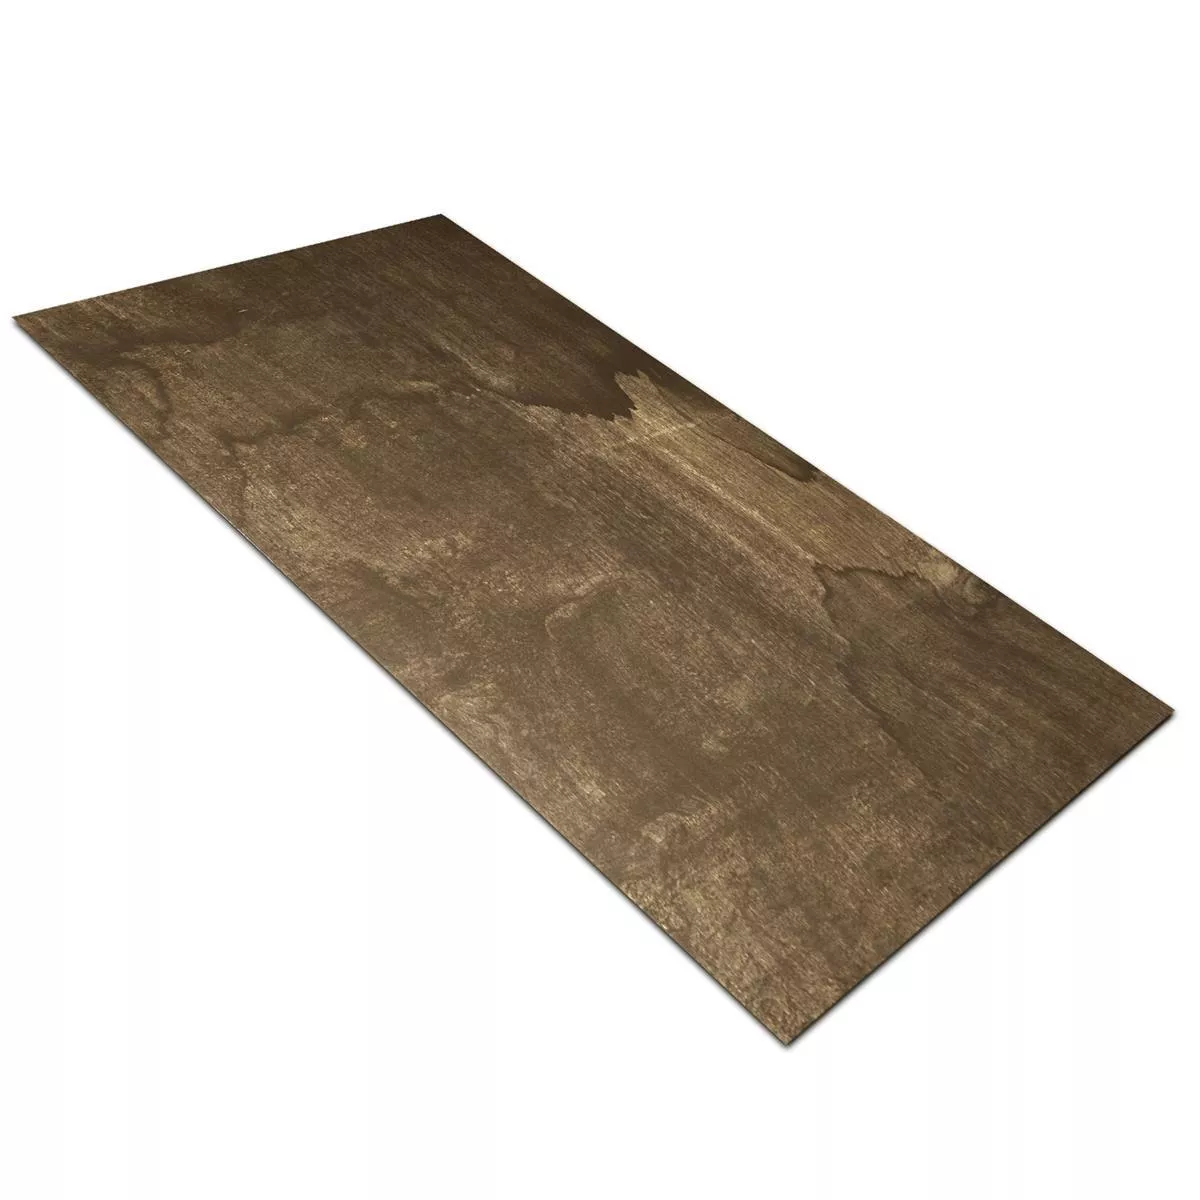 Sample Wood Optic Floor Tiles Colonia Kastanie 45x90cm